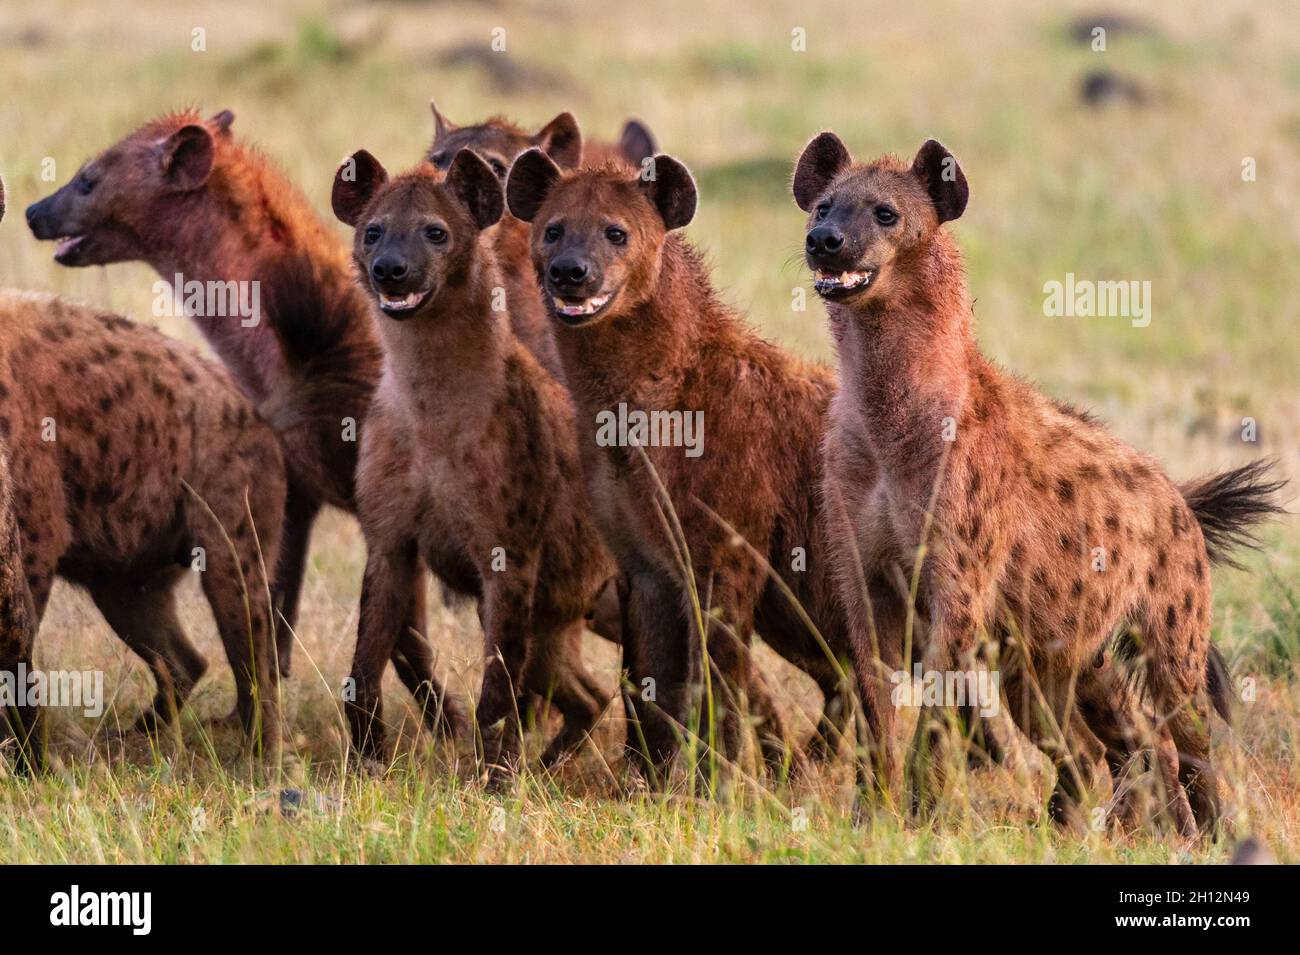 Spotted hyenas, Crocuta crocuta, feeding on a wildebeest, Connochaetes taurinus. Stock Photo